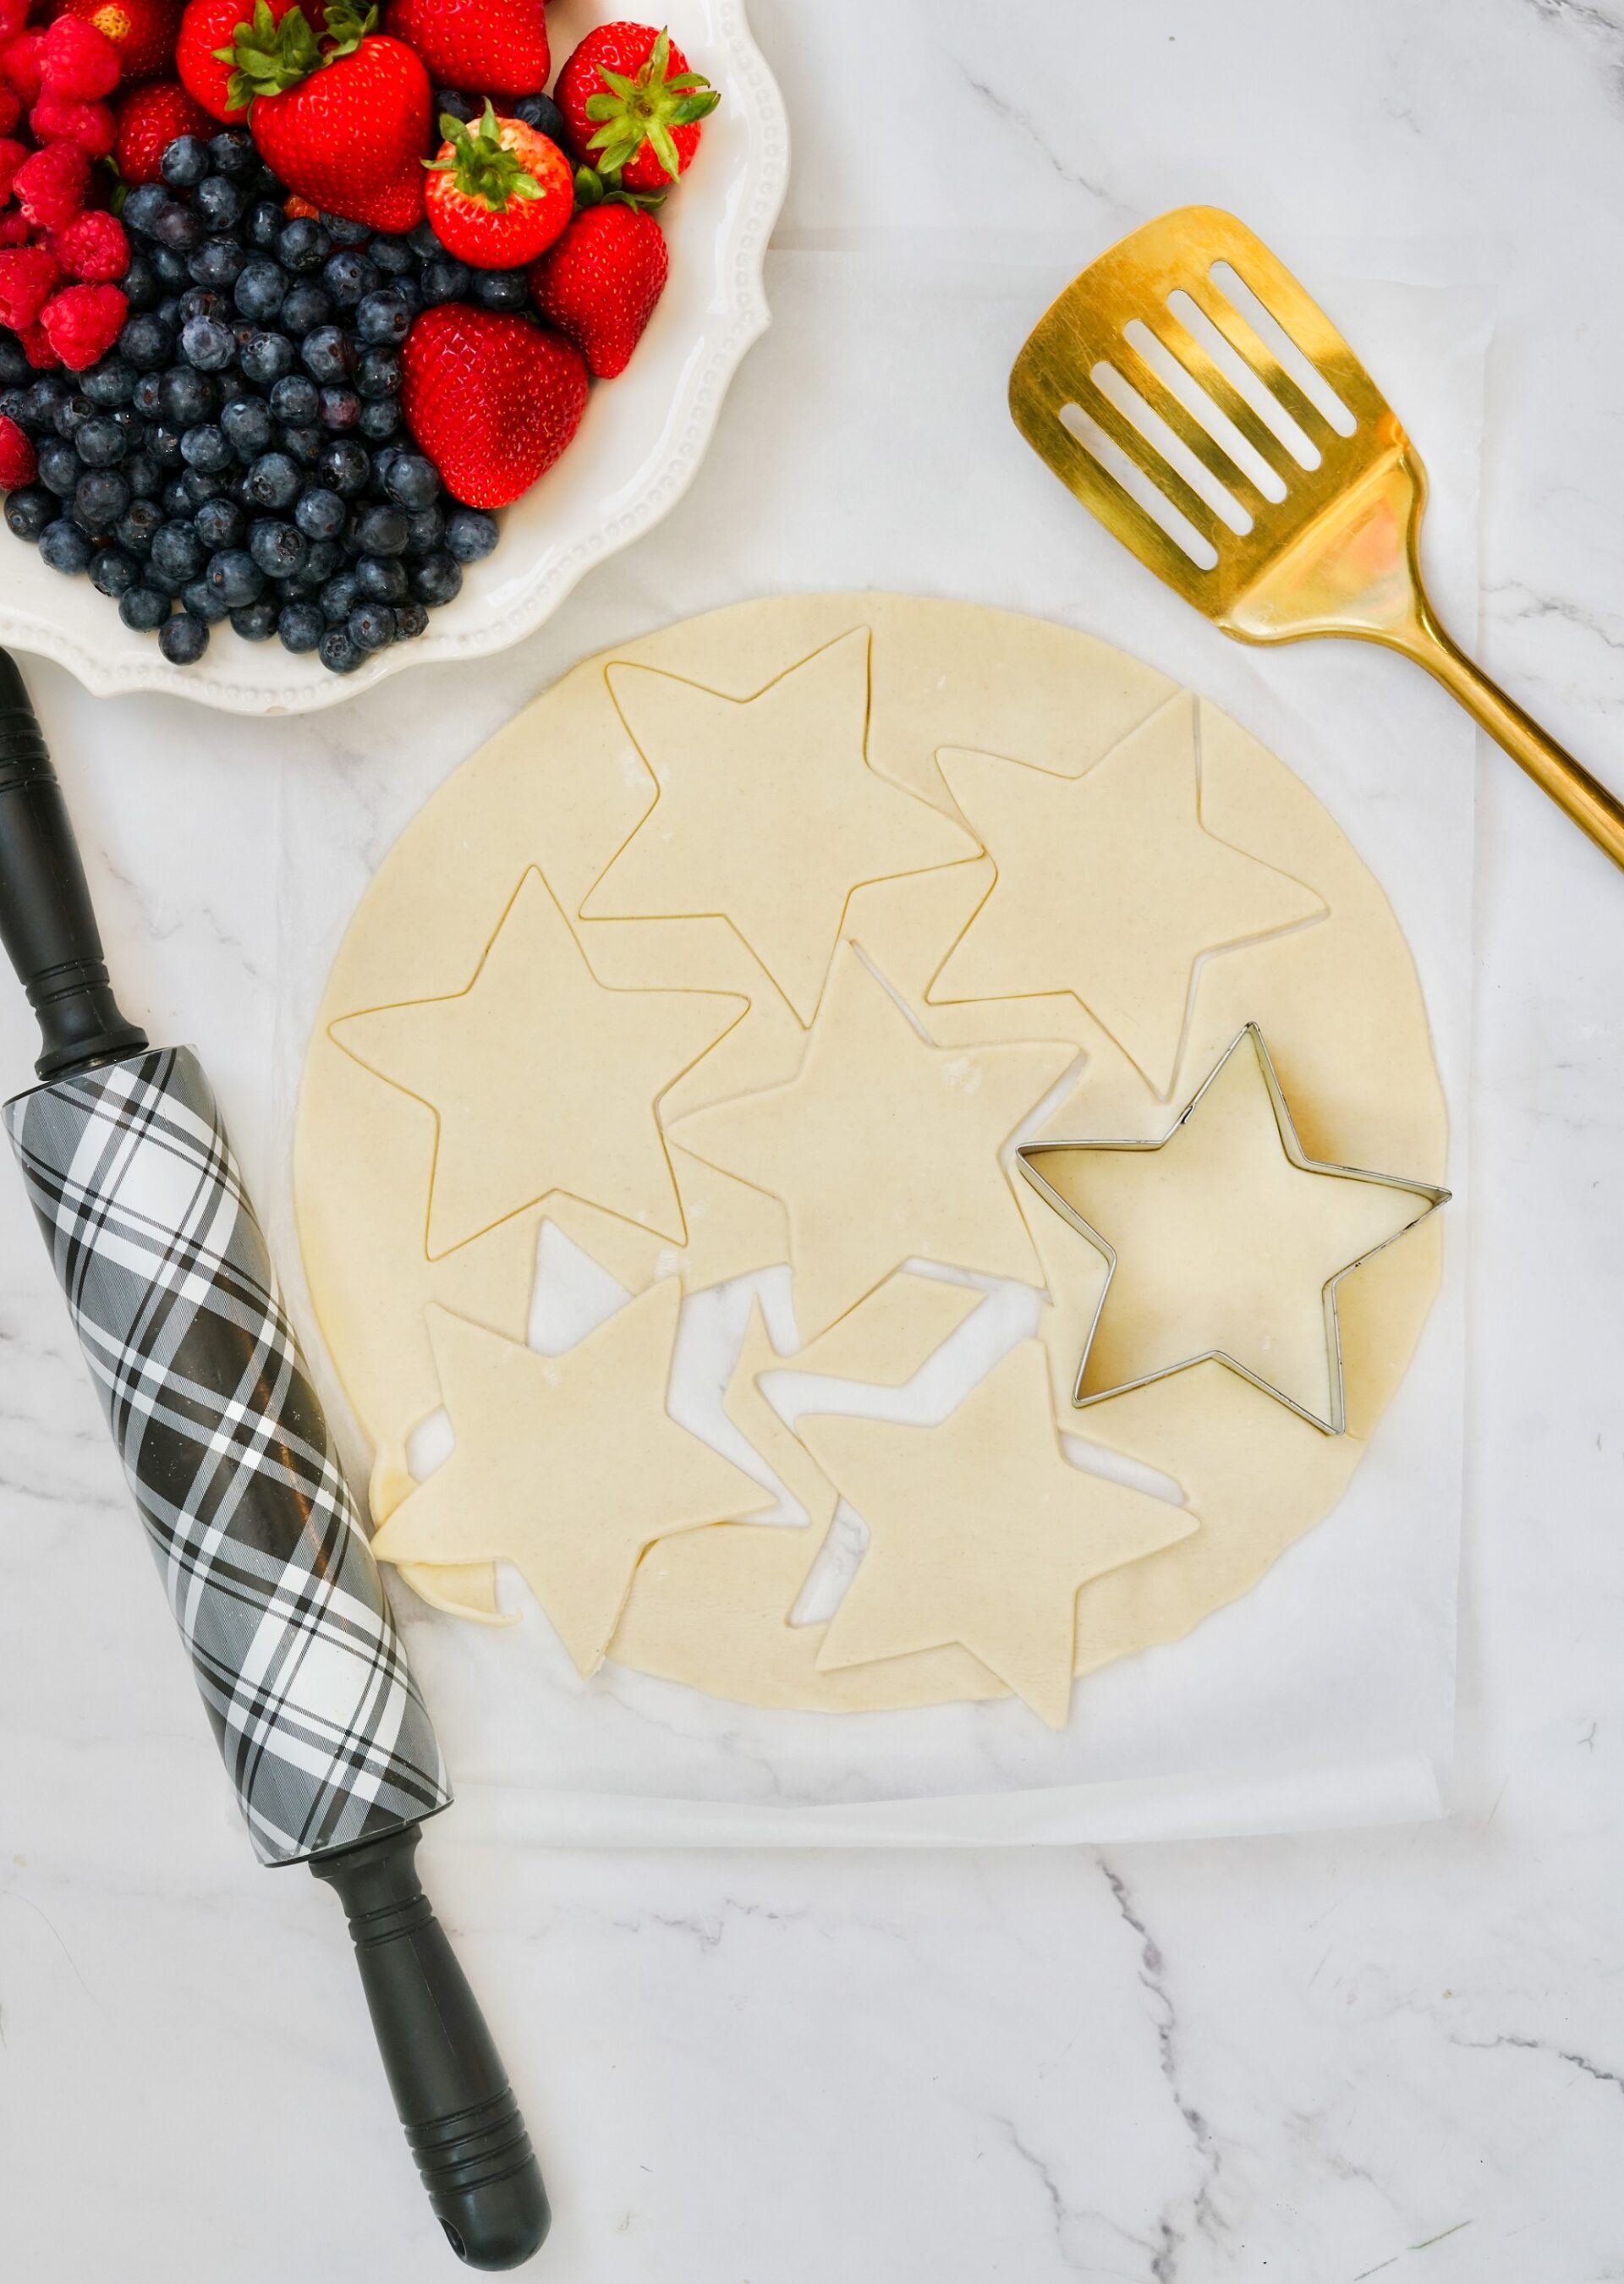 Cutting pie crust with a star shaped cutter.